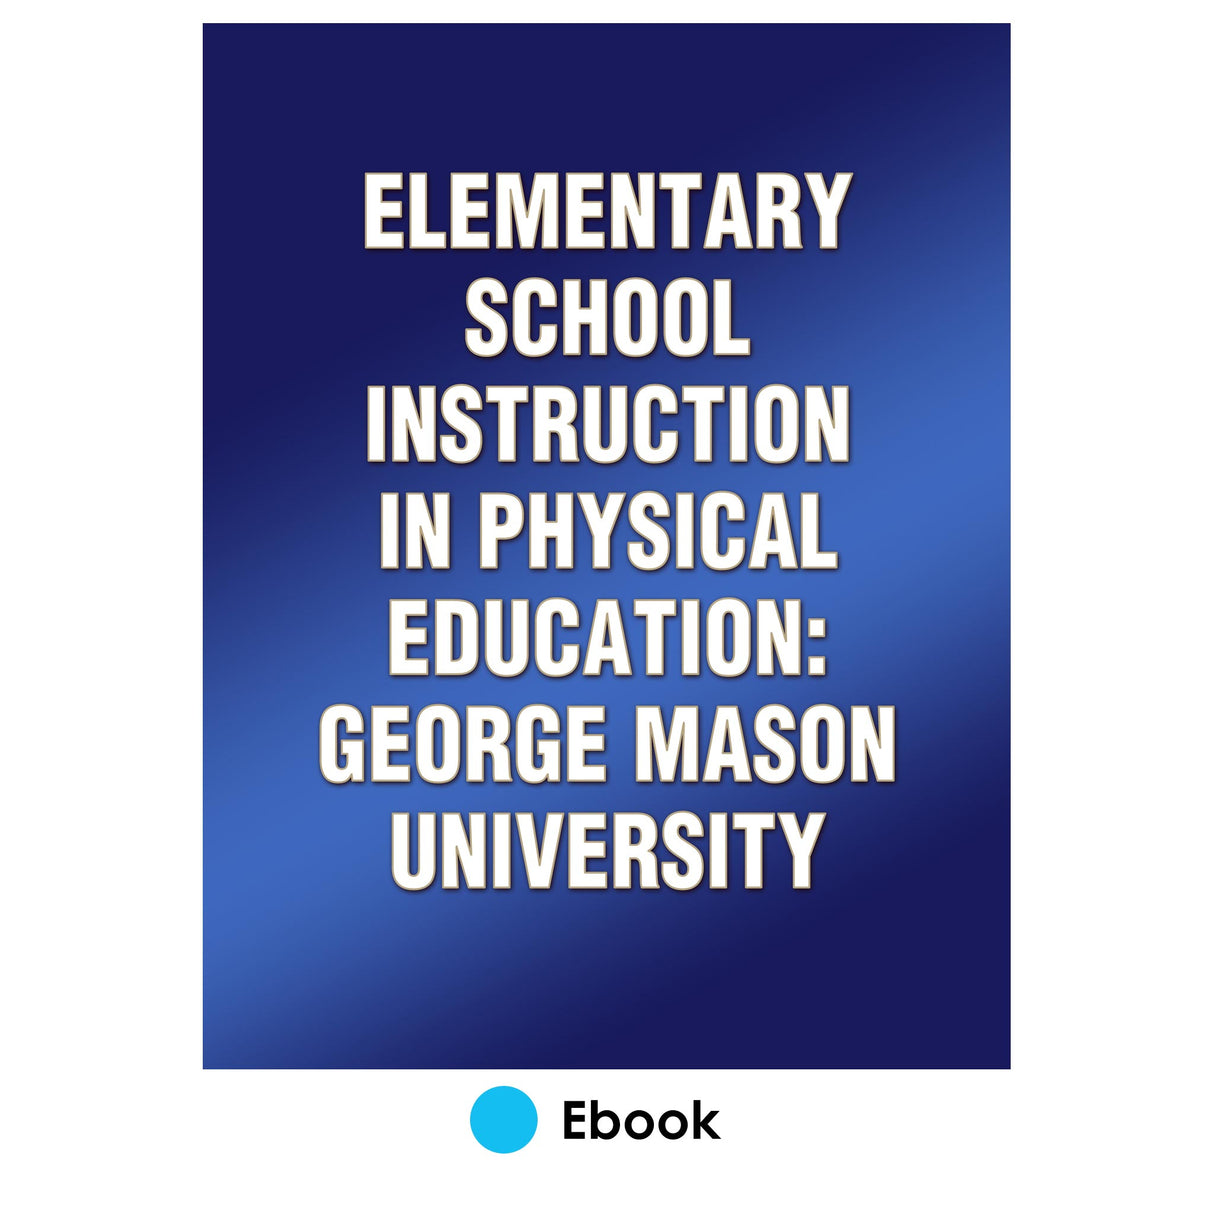 Elementary School Instruction in Physical Education: George Mason University